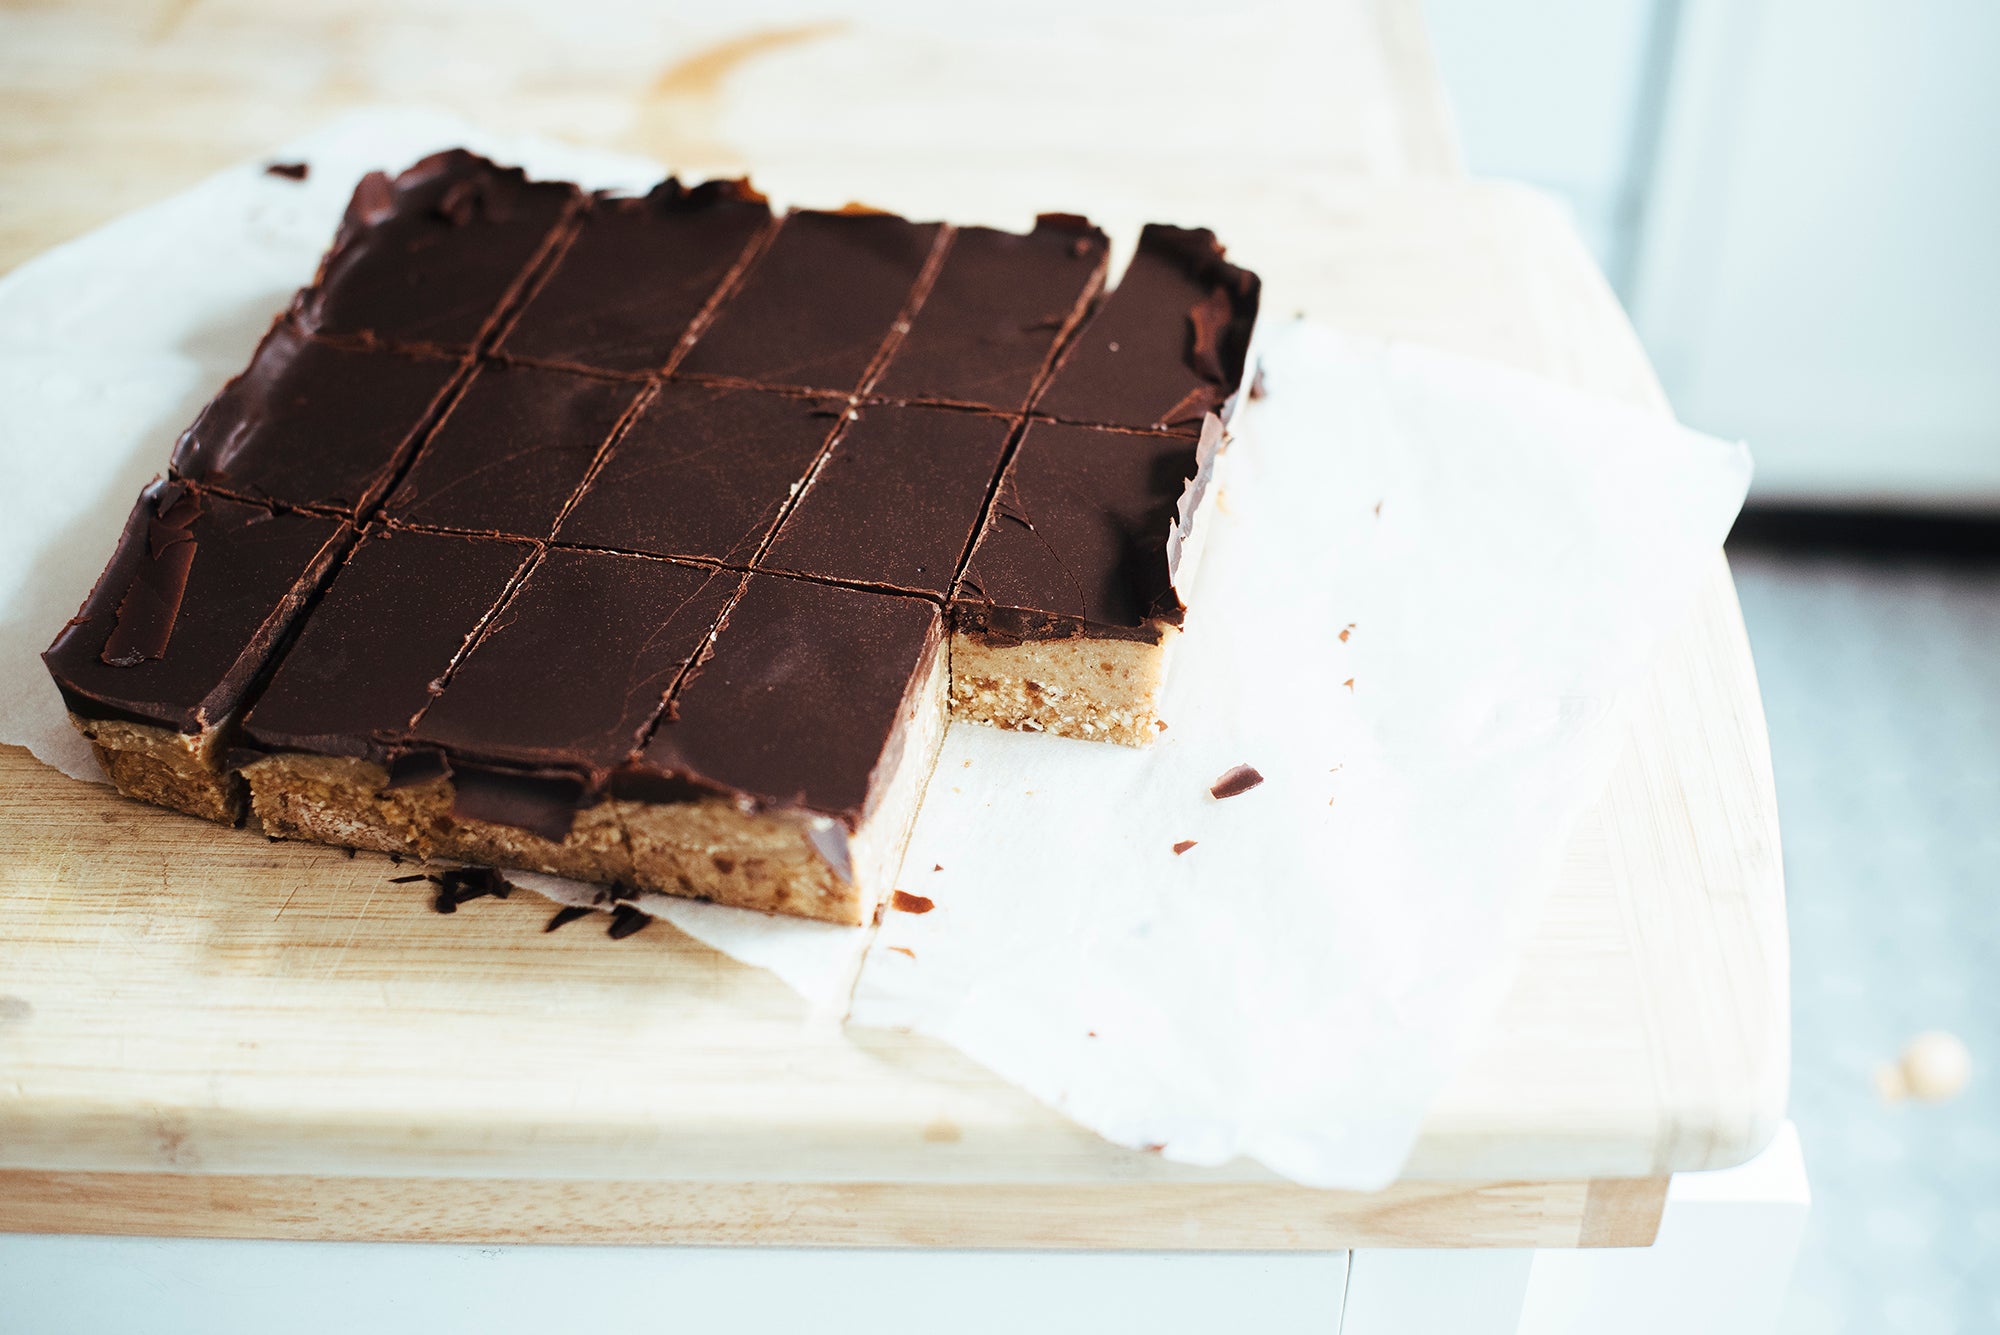 vegan chocolate caramel slice recipe (book review: the healthy convert) 